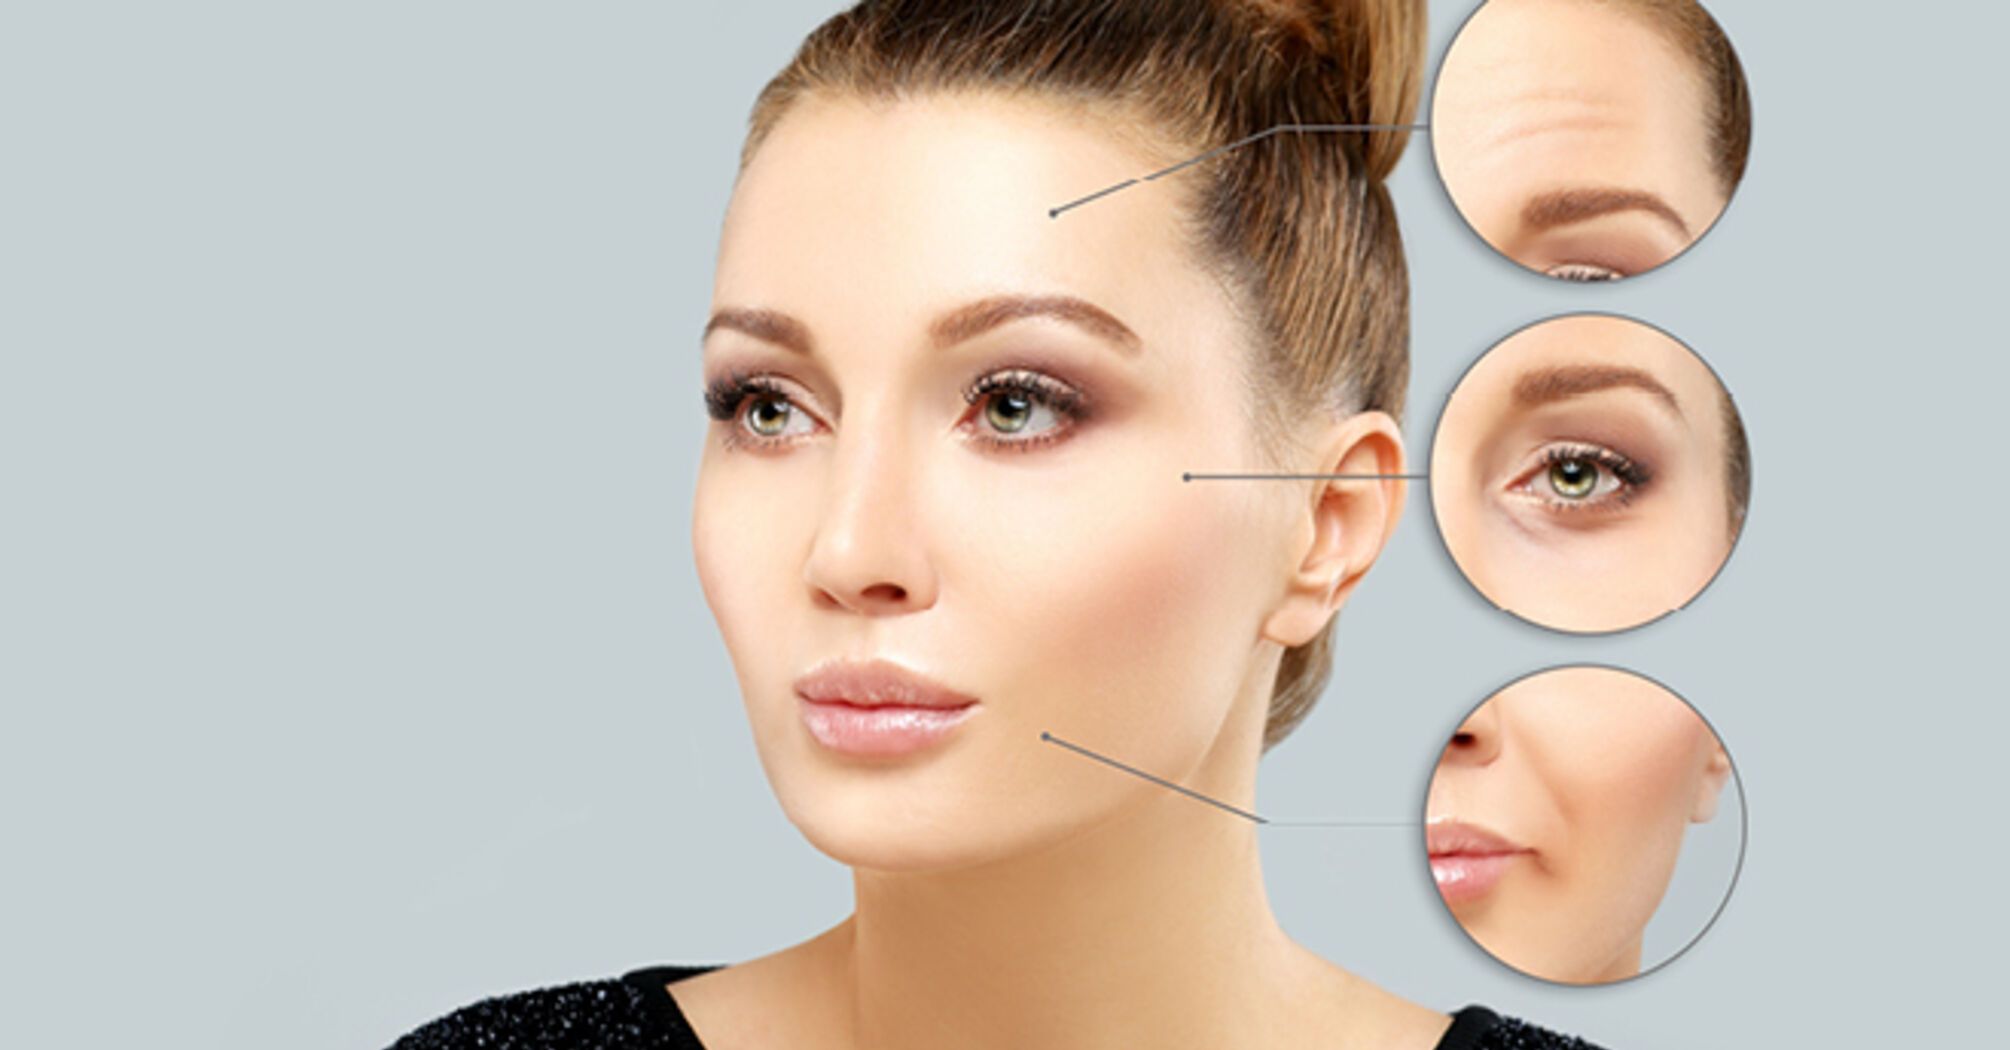 Should you get Botox for facial rejuvenation